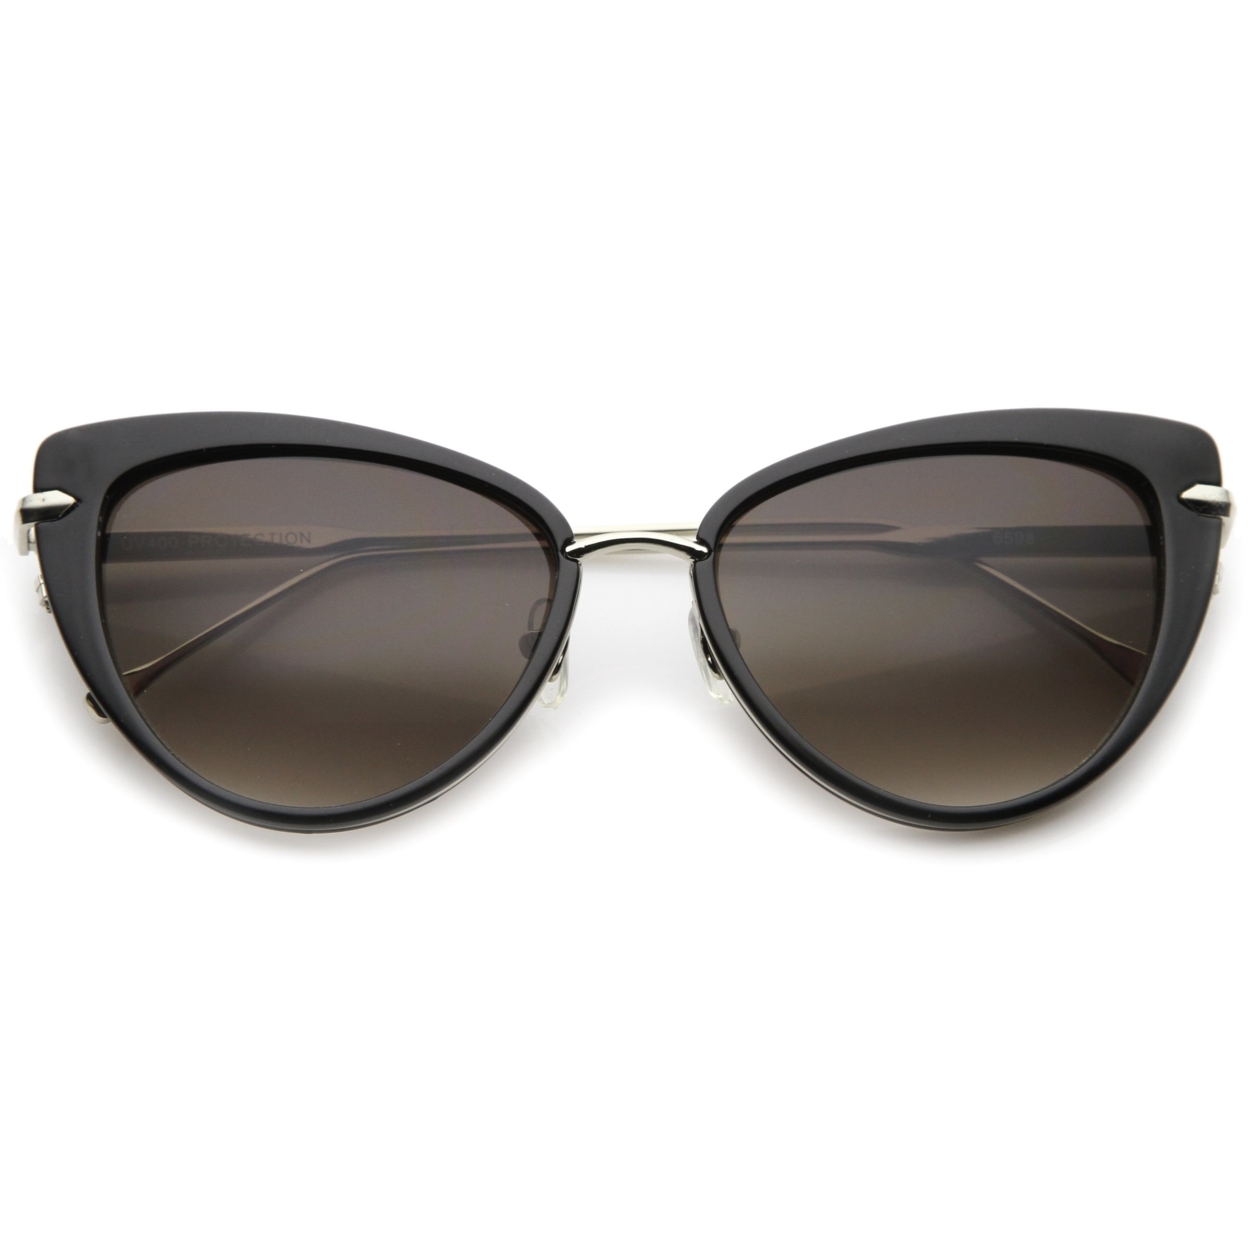 Women's Glam High Fashion Ultra Thin Metal Temple Cat Eye Sunglasses 55mm - Black-Silver / Lavender